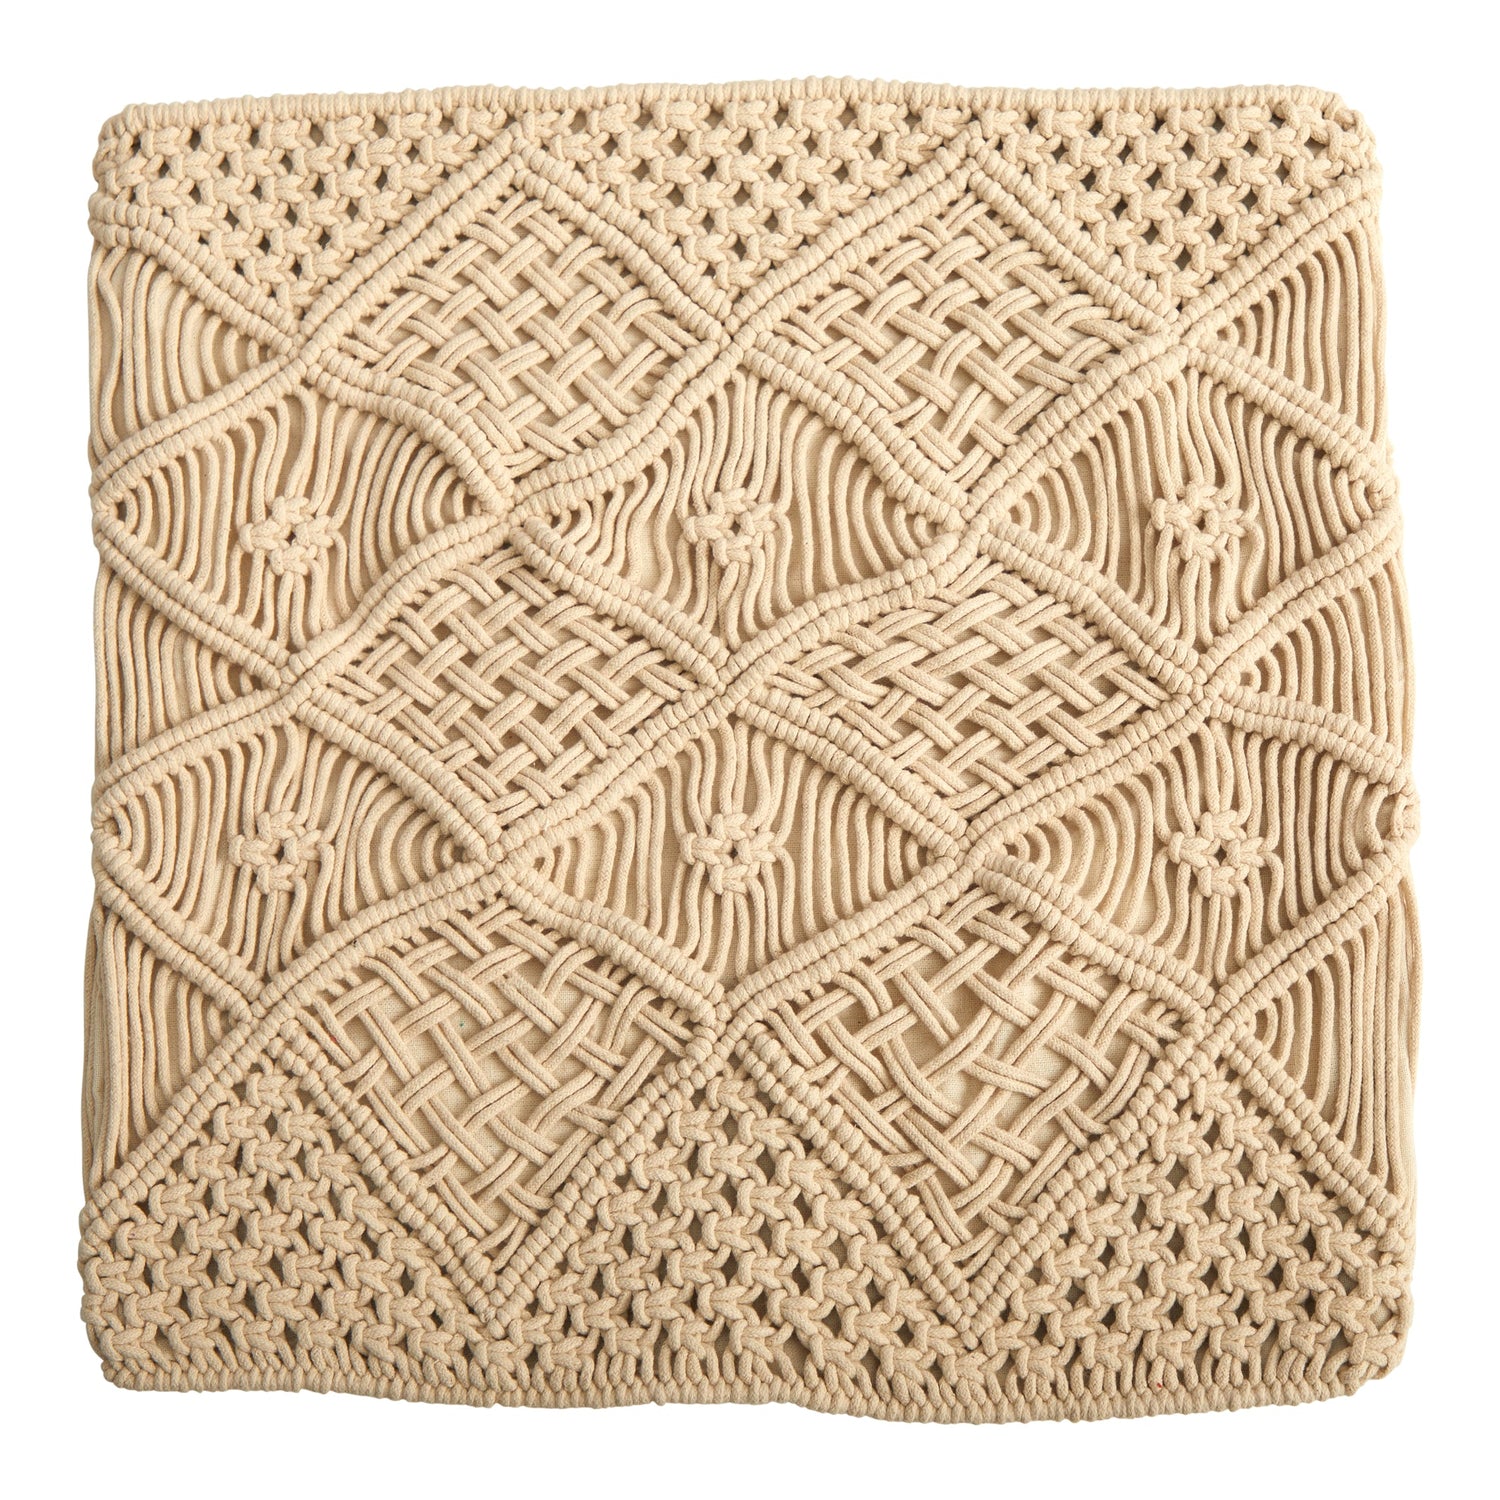 18” Boho Cross Woven Macrame Decorative Pillow Cover